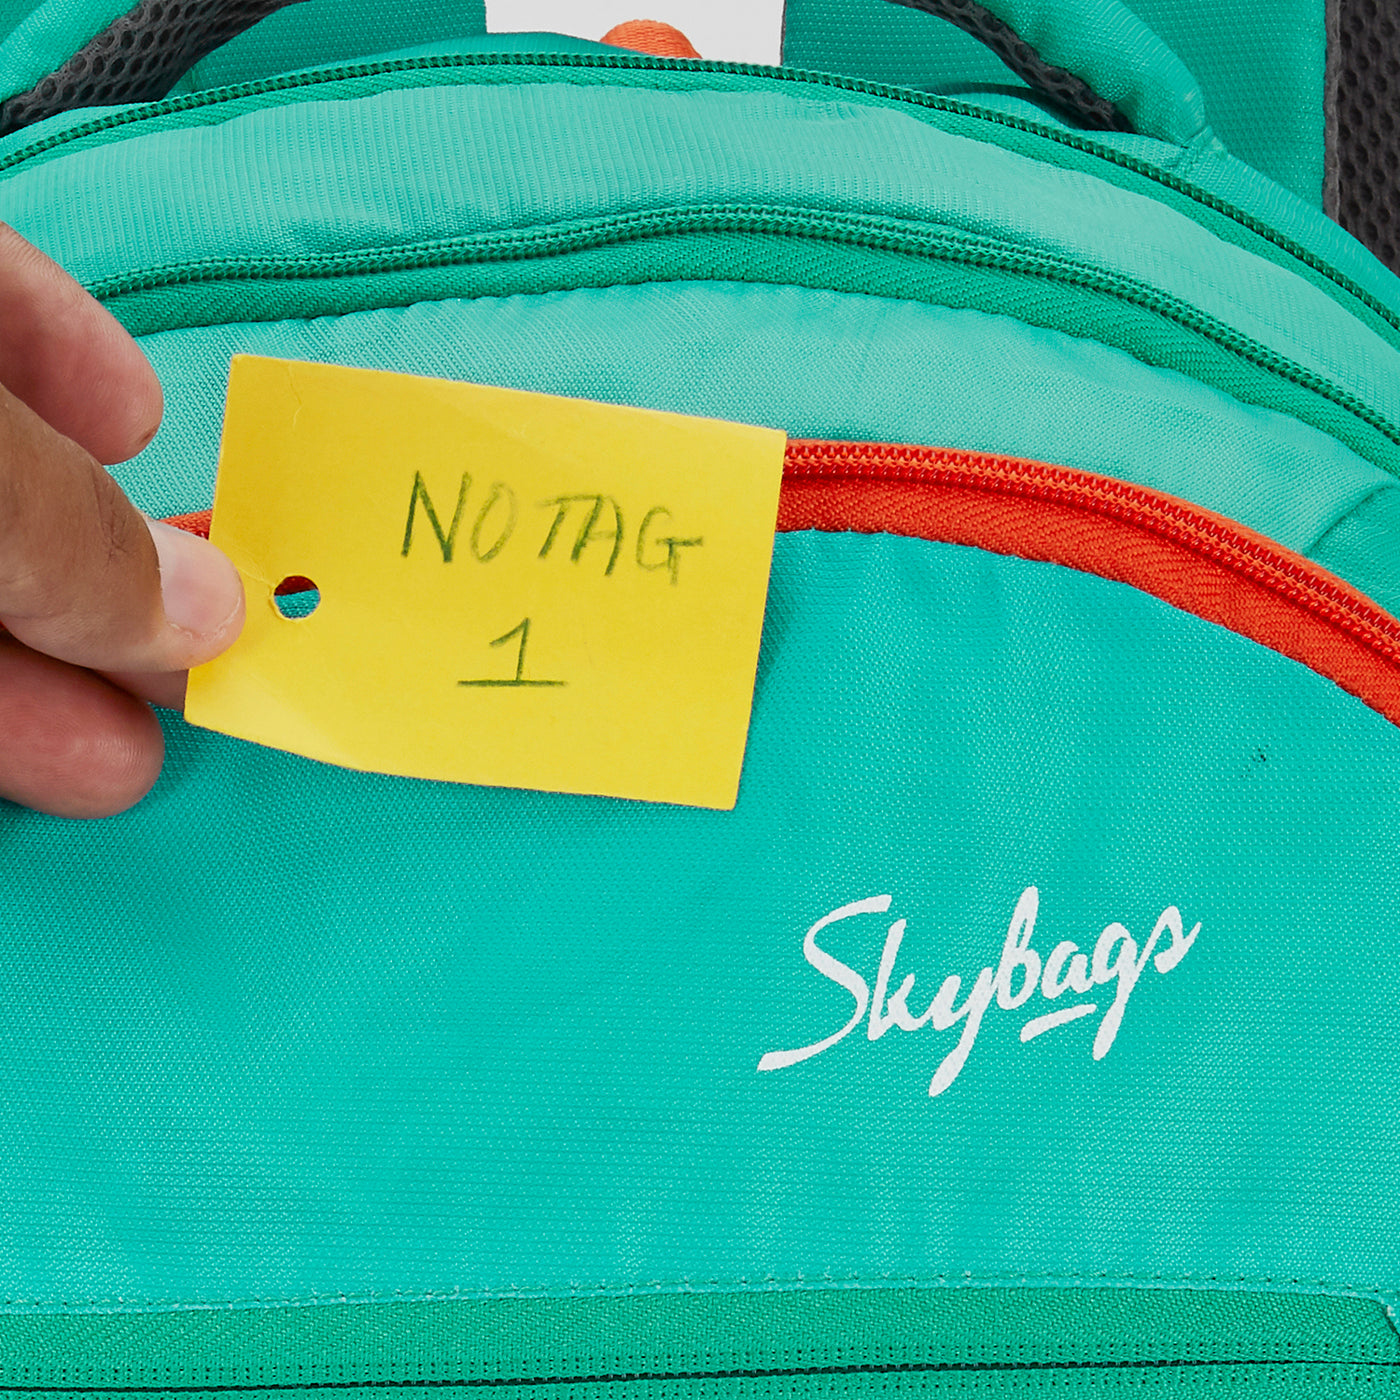 Skybags New Neon 22 "02 School Backpack Teal"